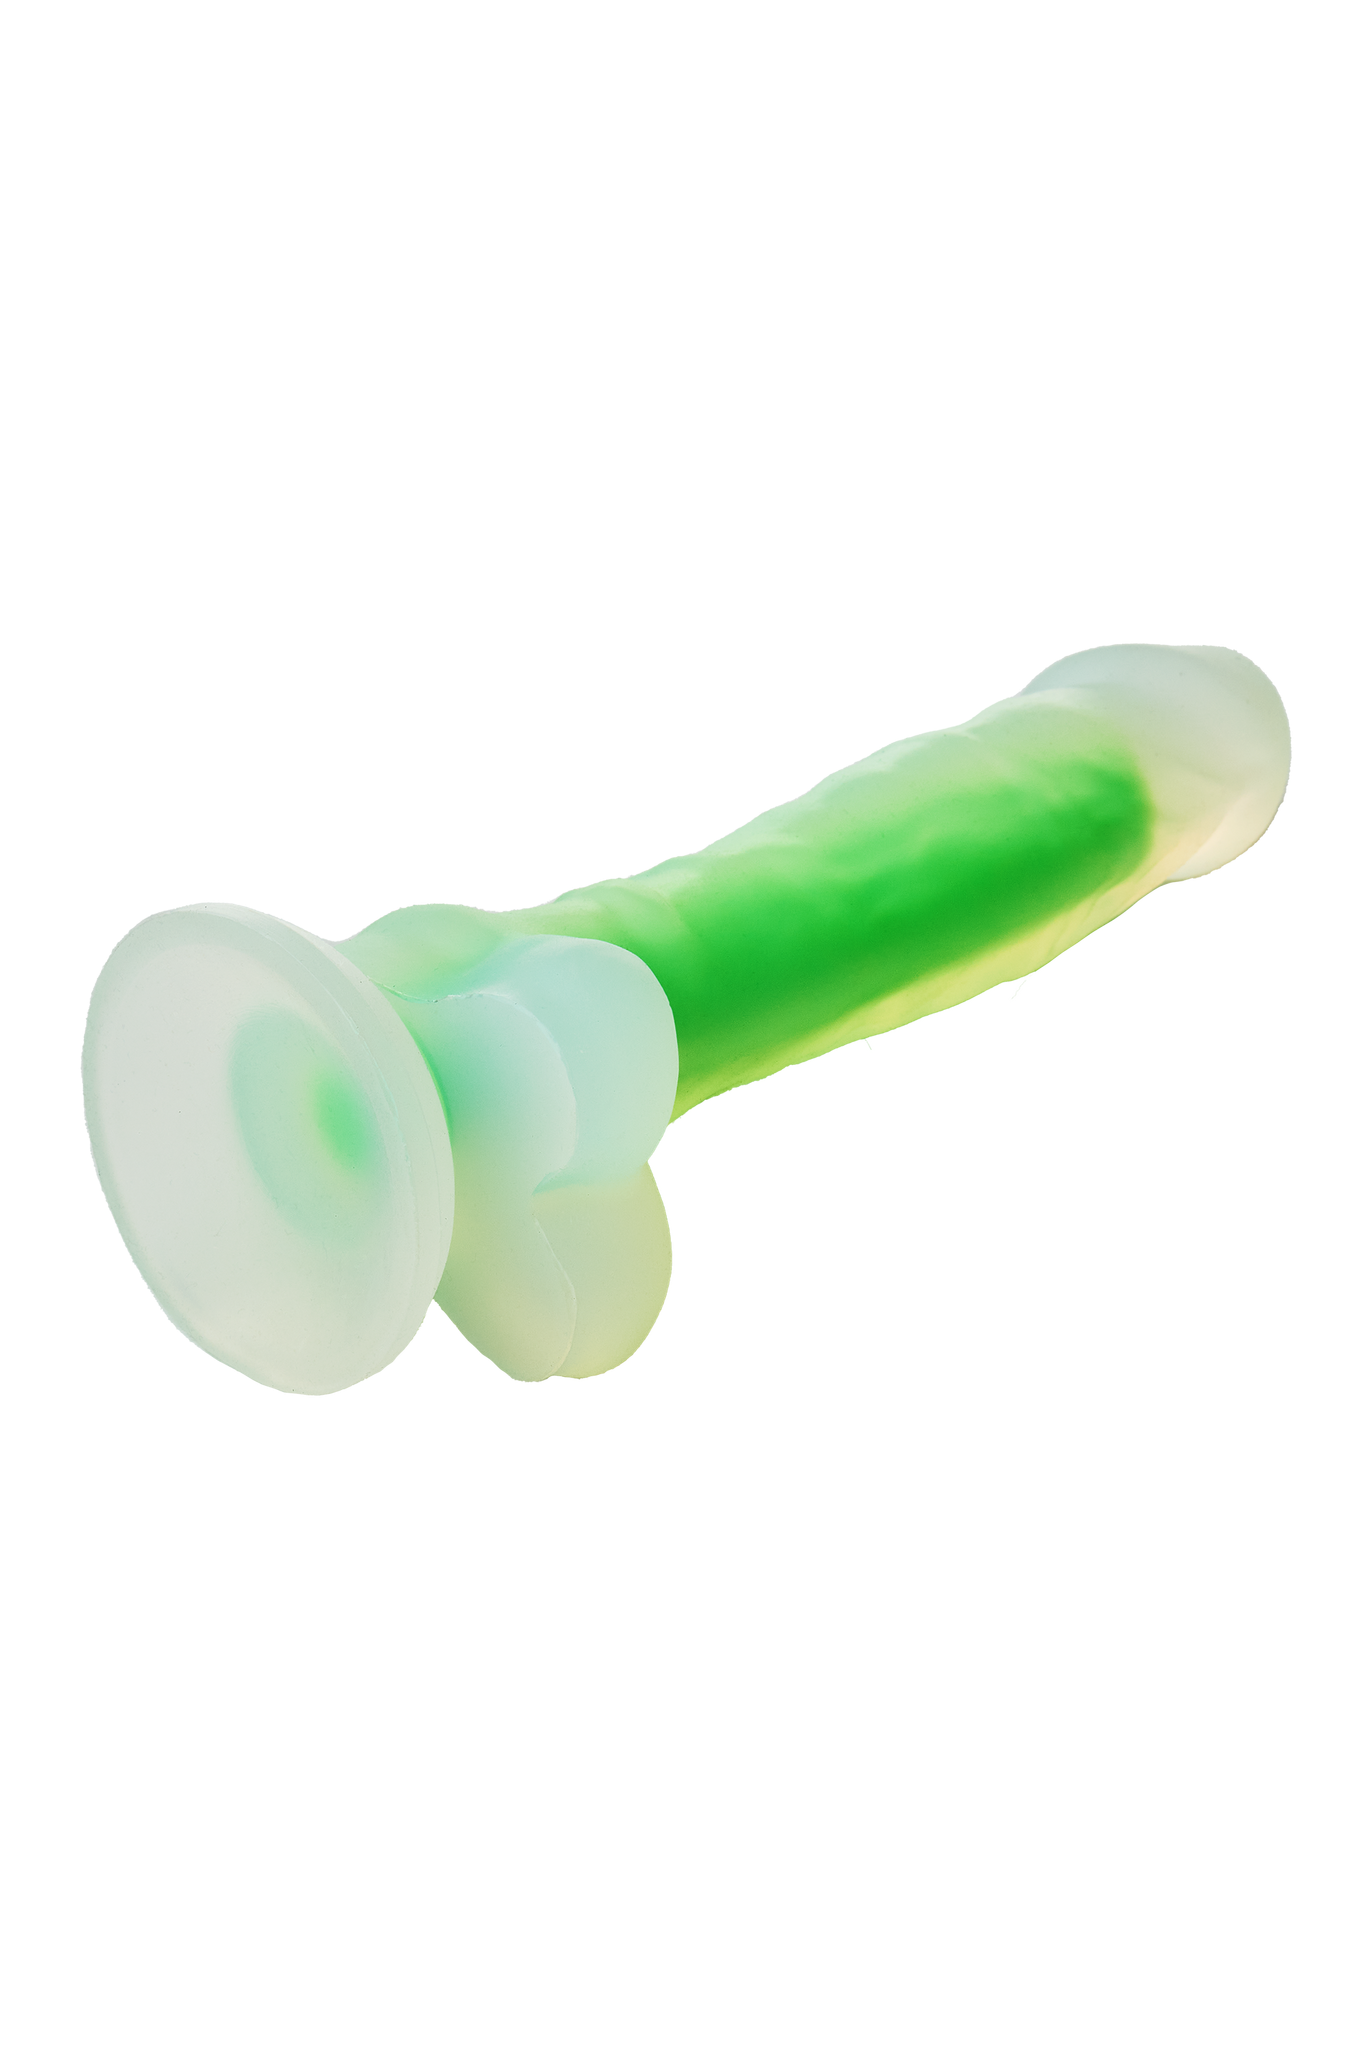 Radiant - Glow-in-the-dark dildo, Small, Green